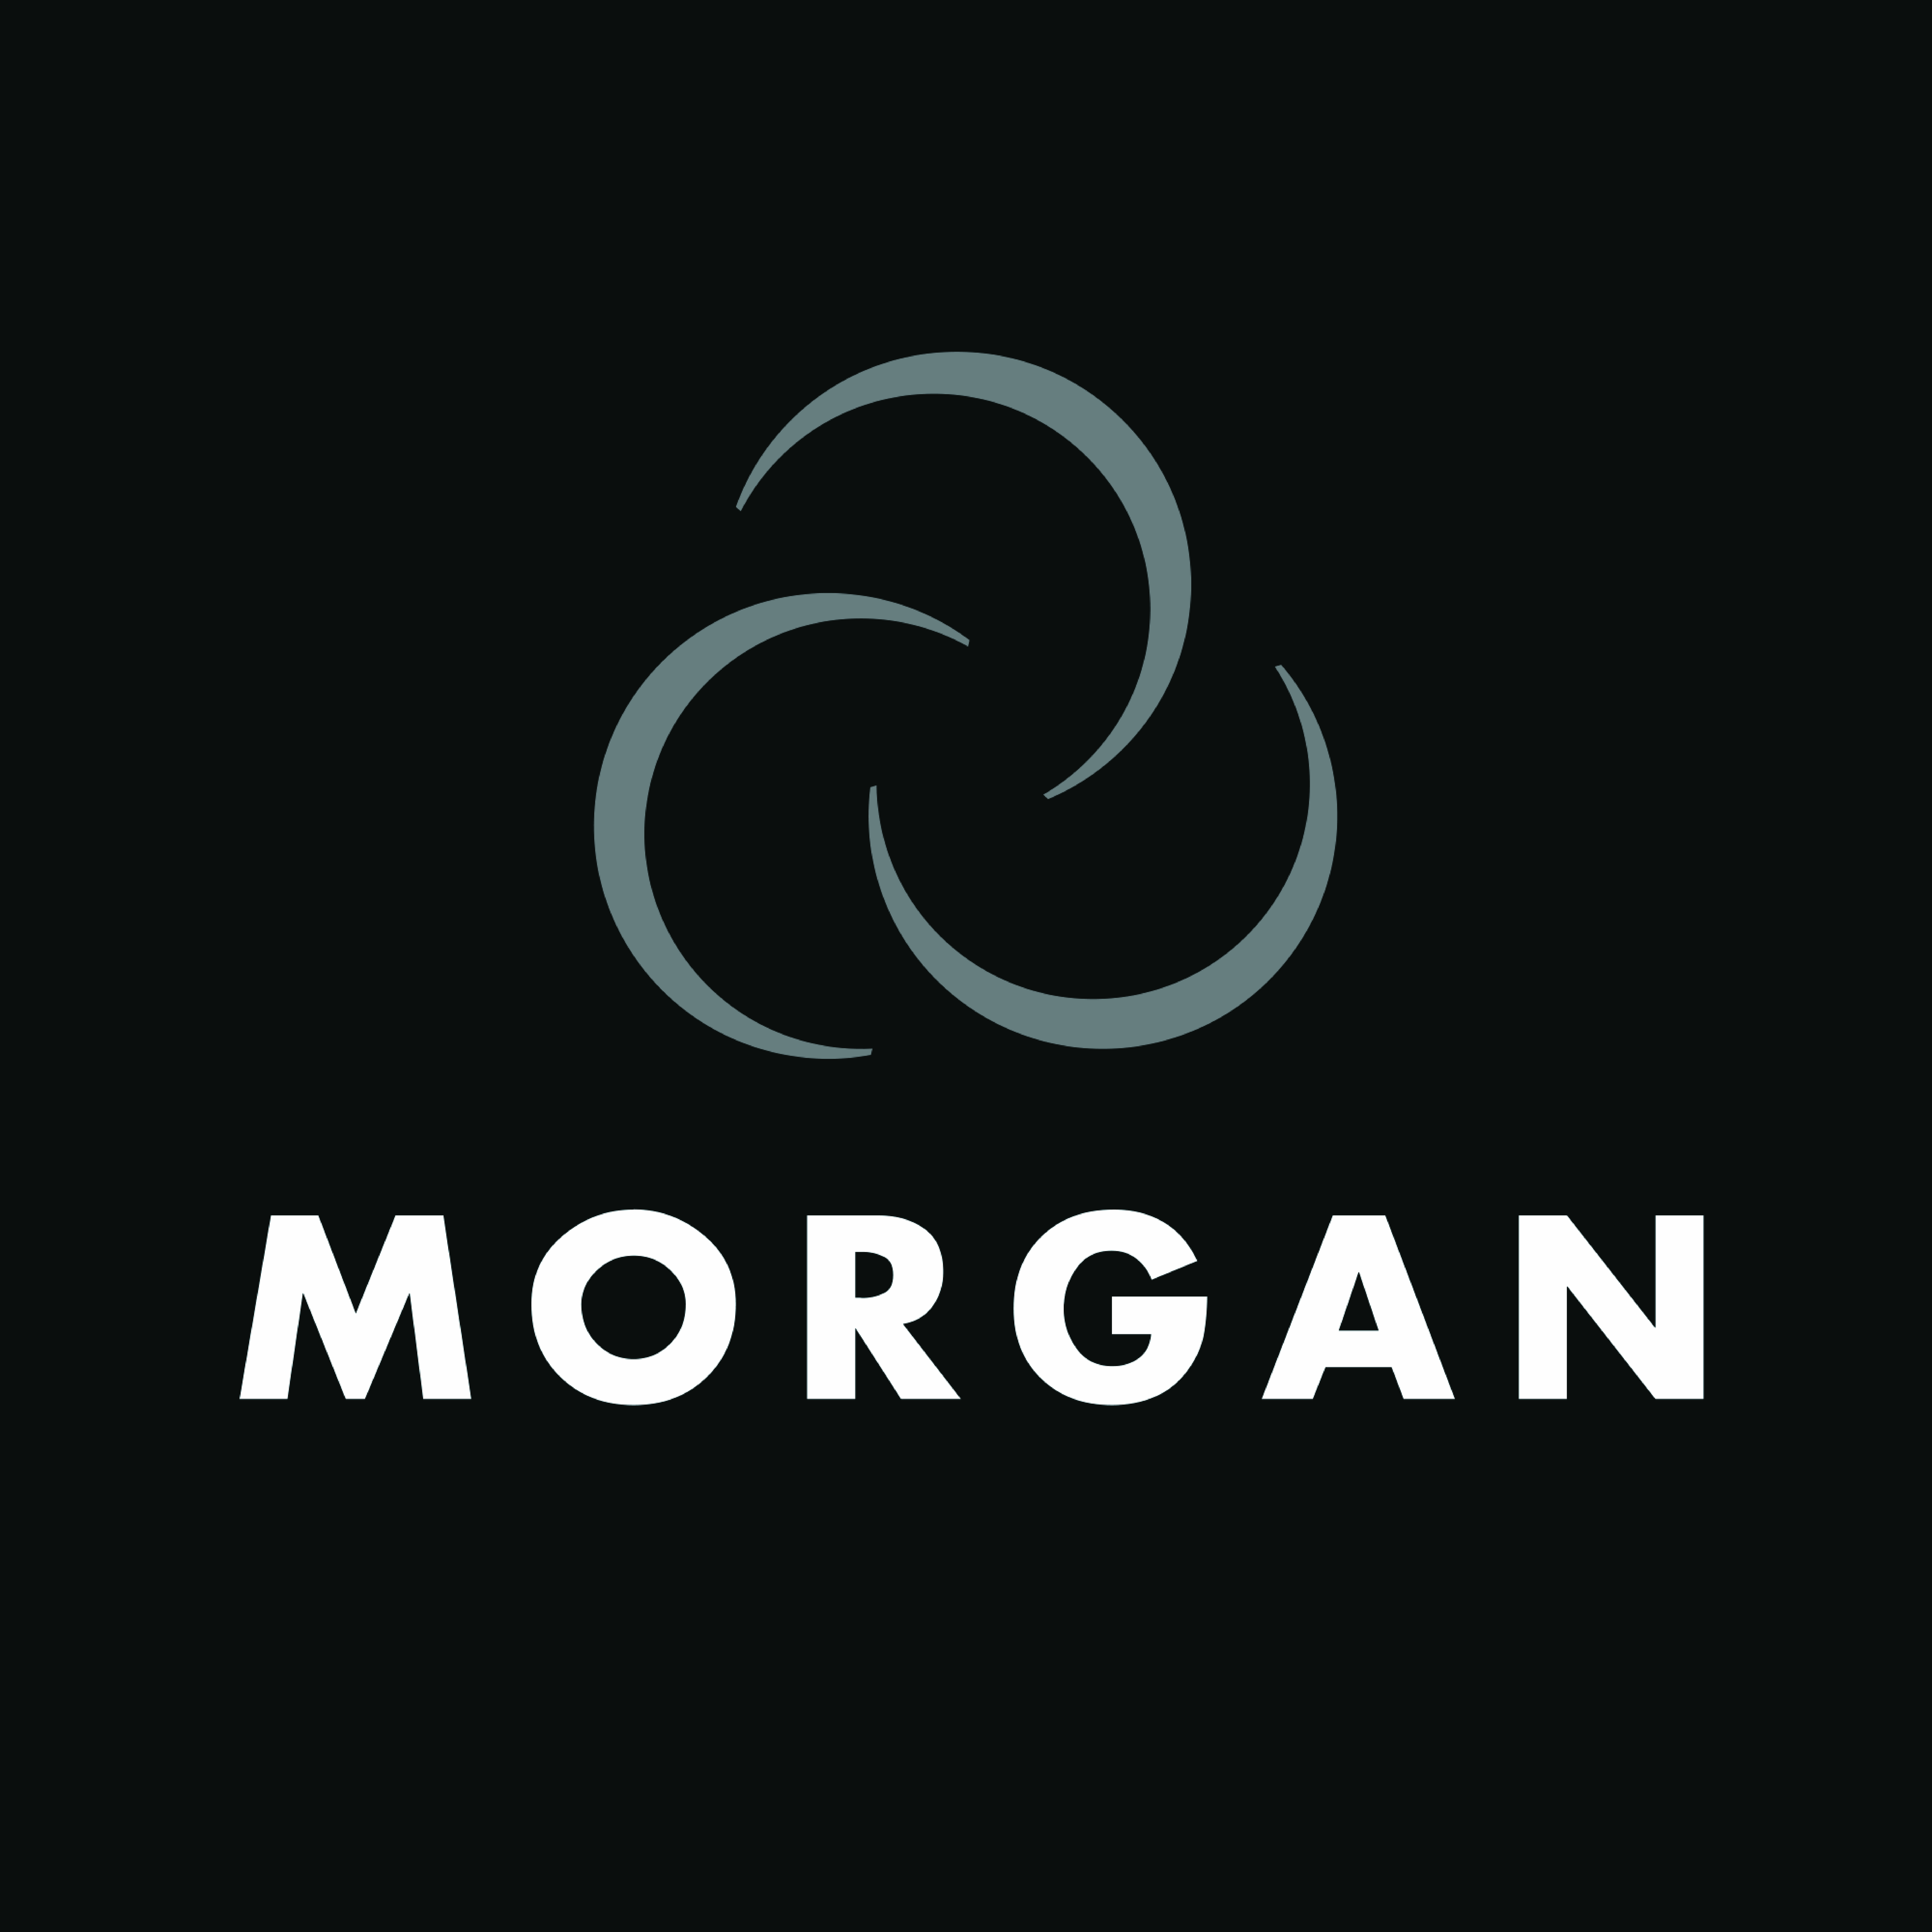 Morgan Consulting